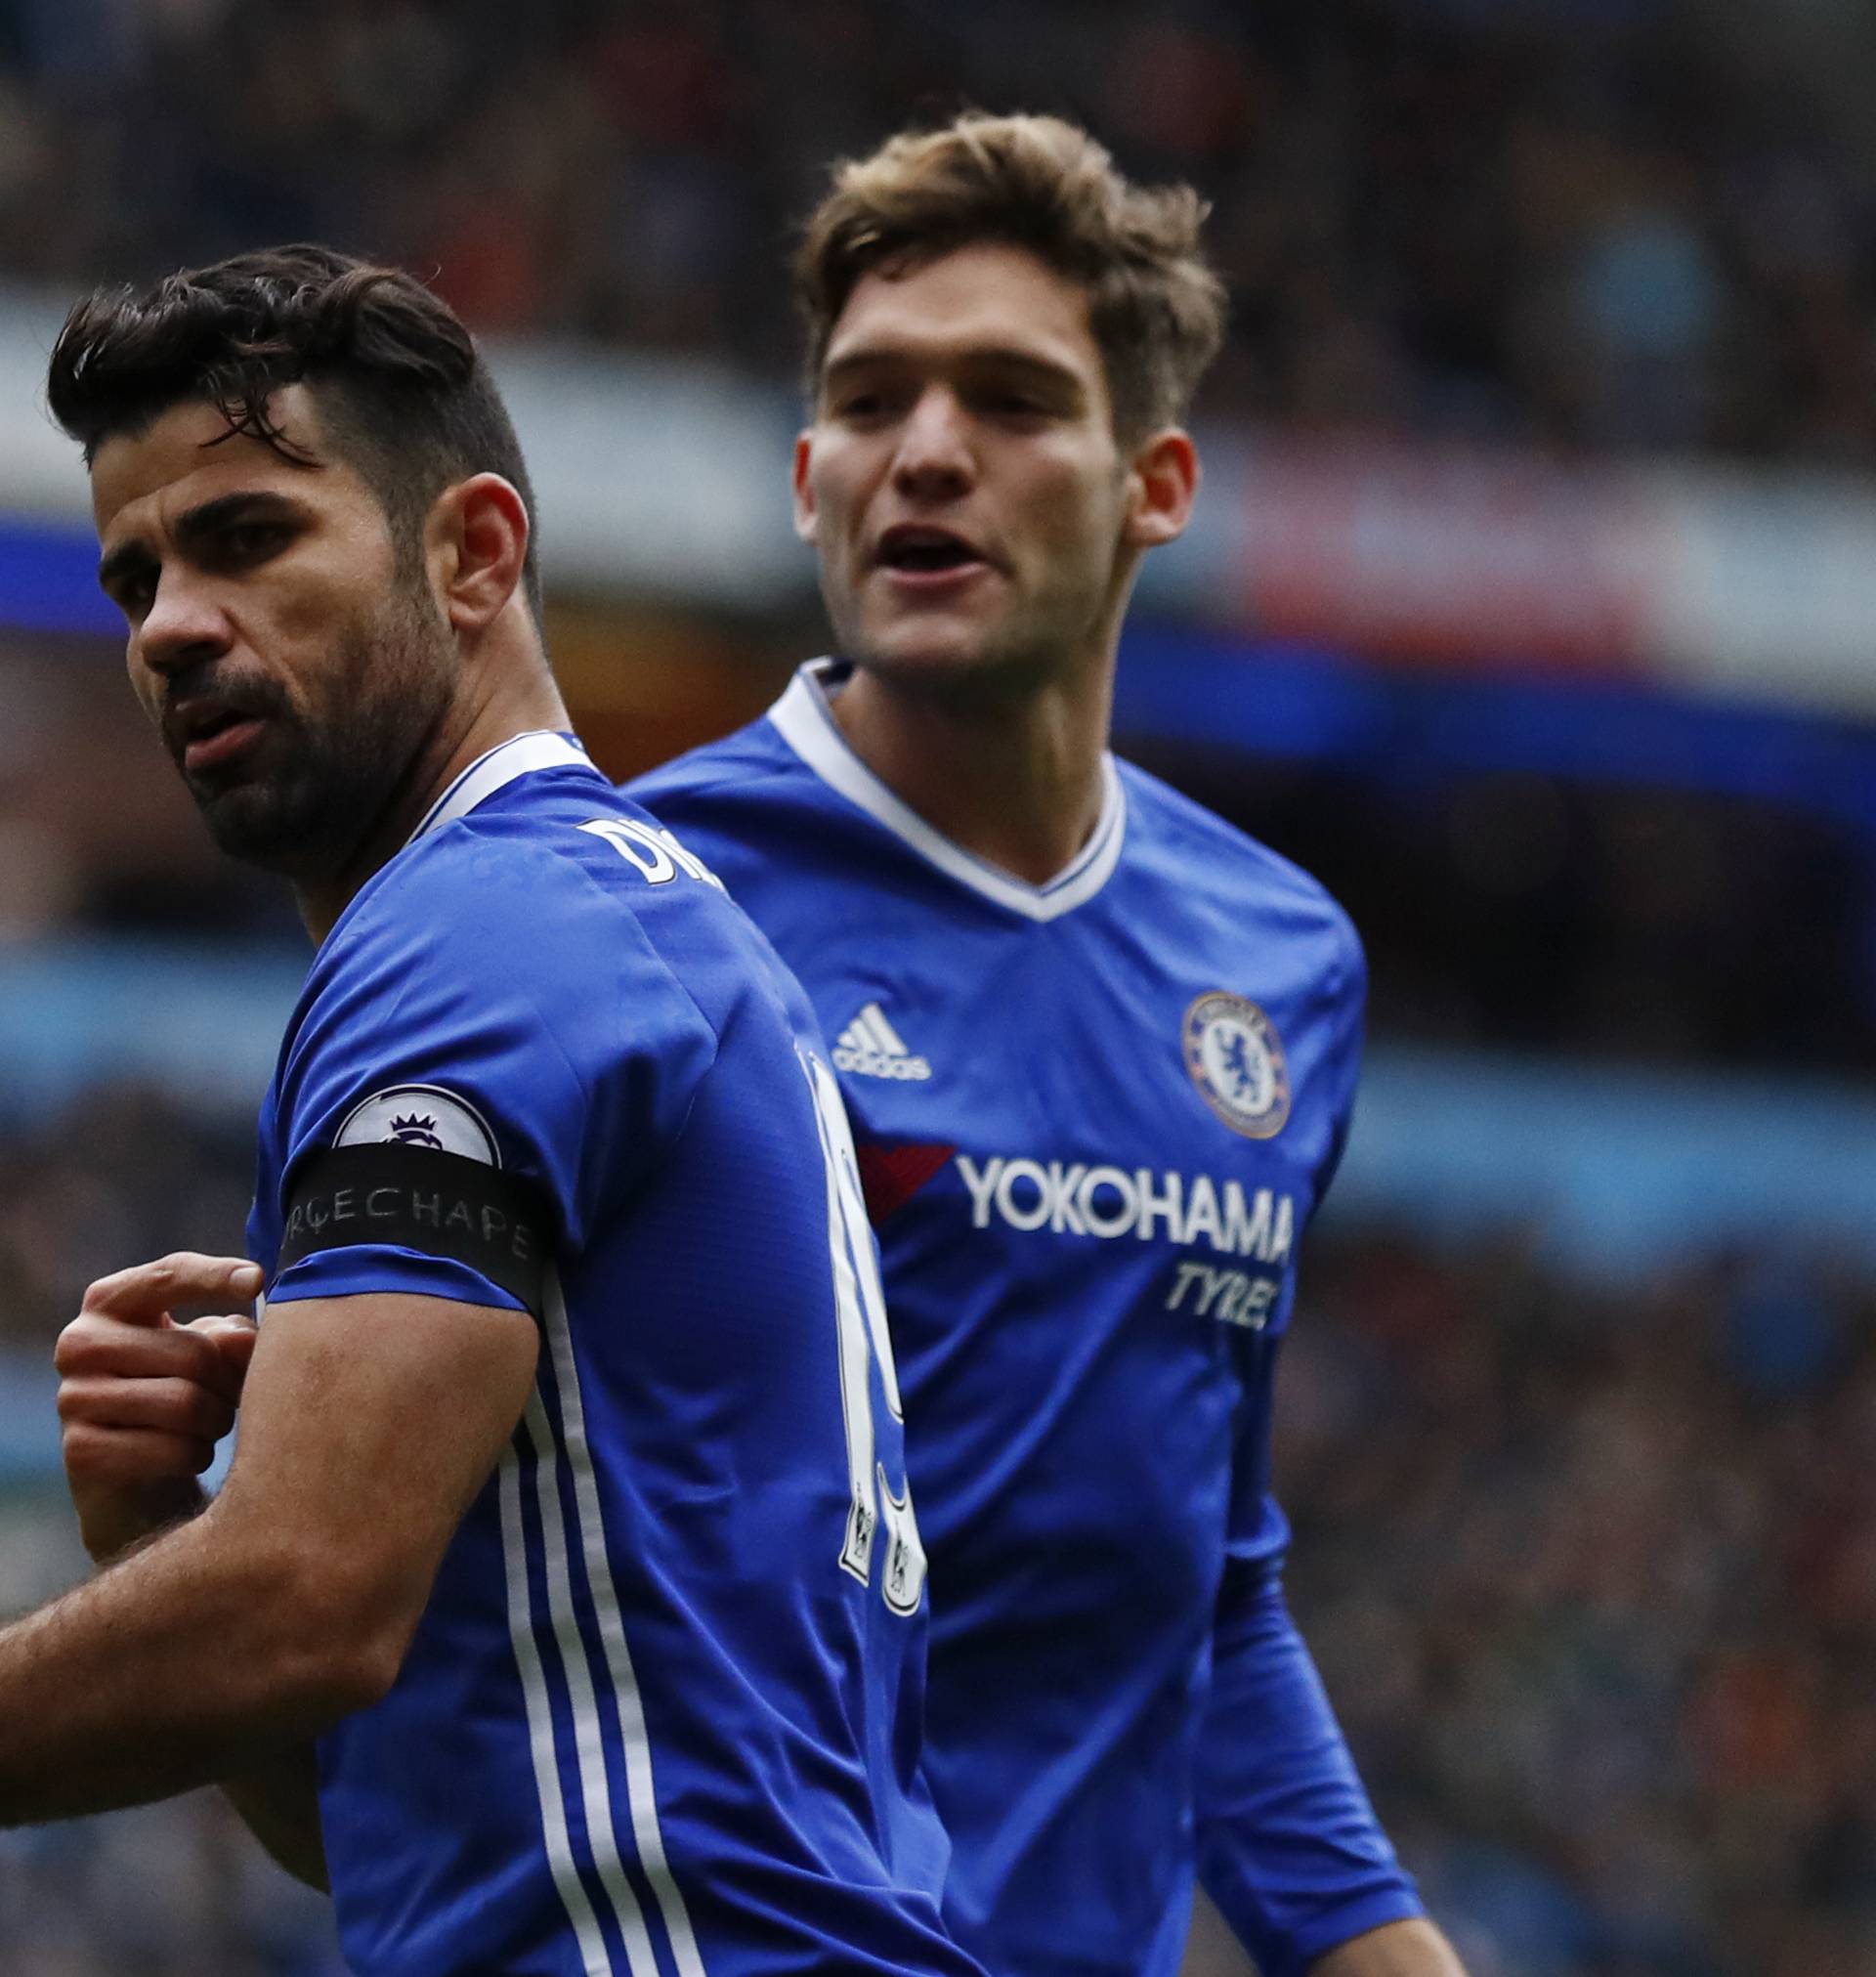 Chelsea's Diego Costa celebrates scoring their first goal